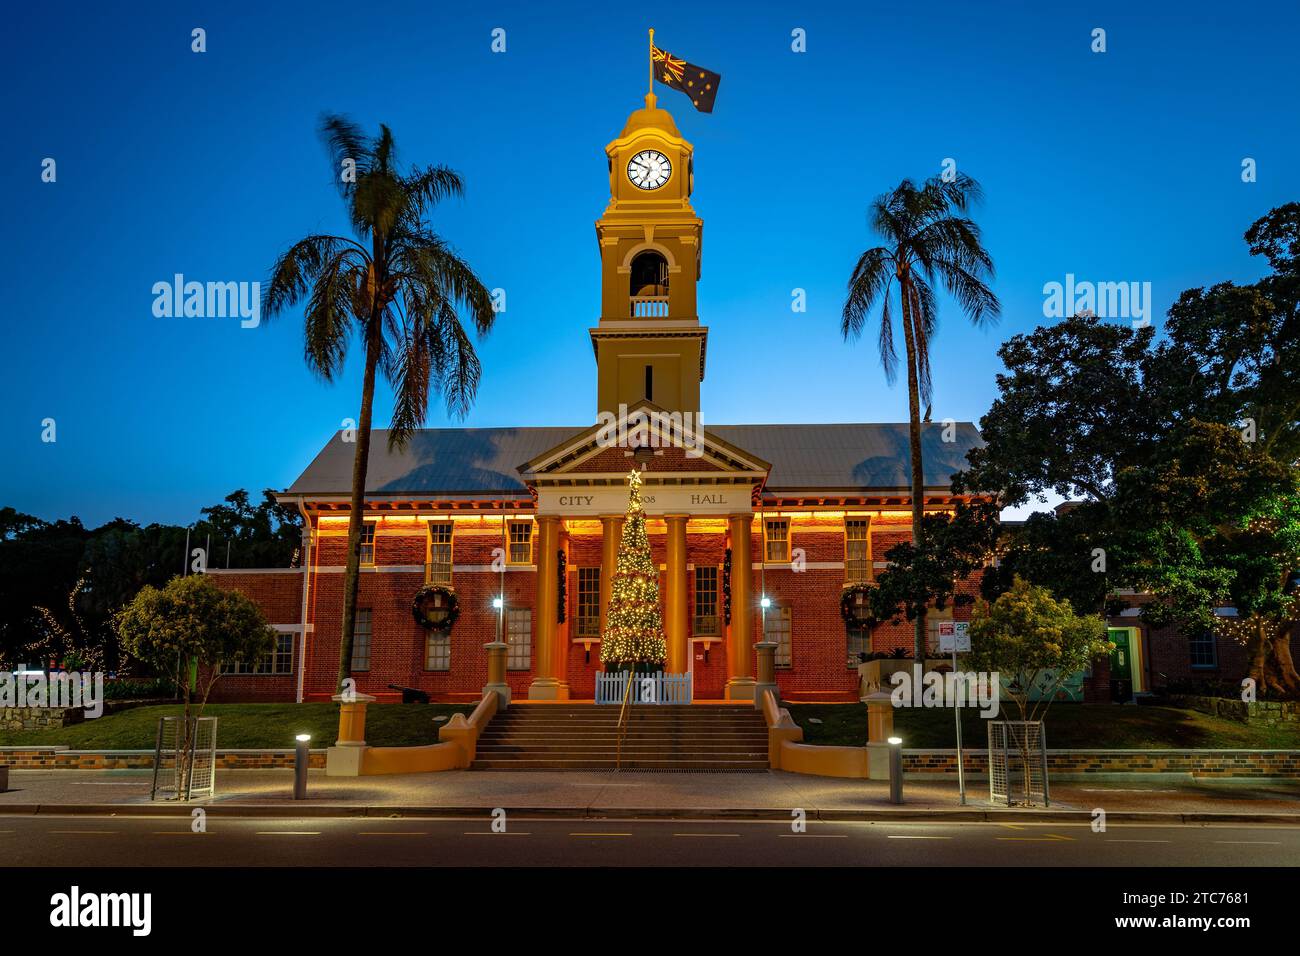 Maryborough, QLD, Australia - City Hall illuminated at night with Christmas decorations Stock Photo